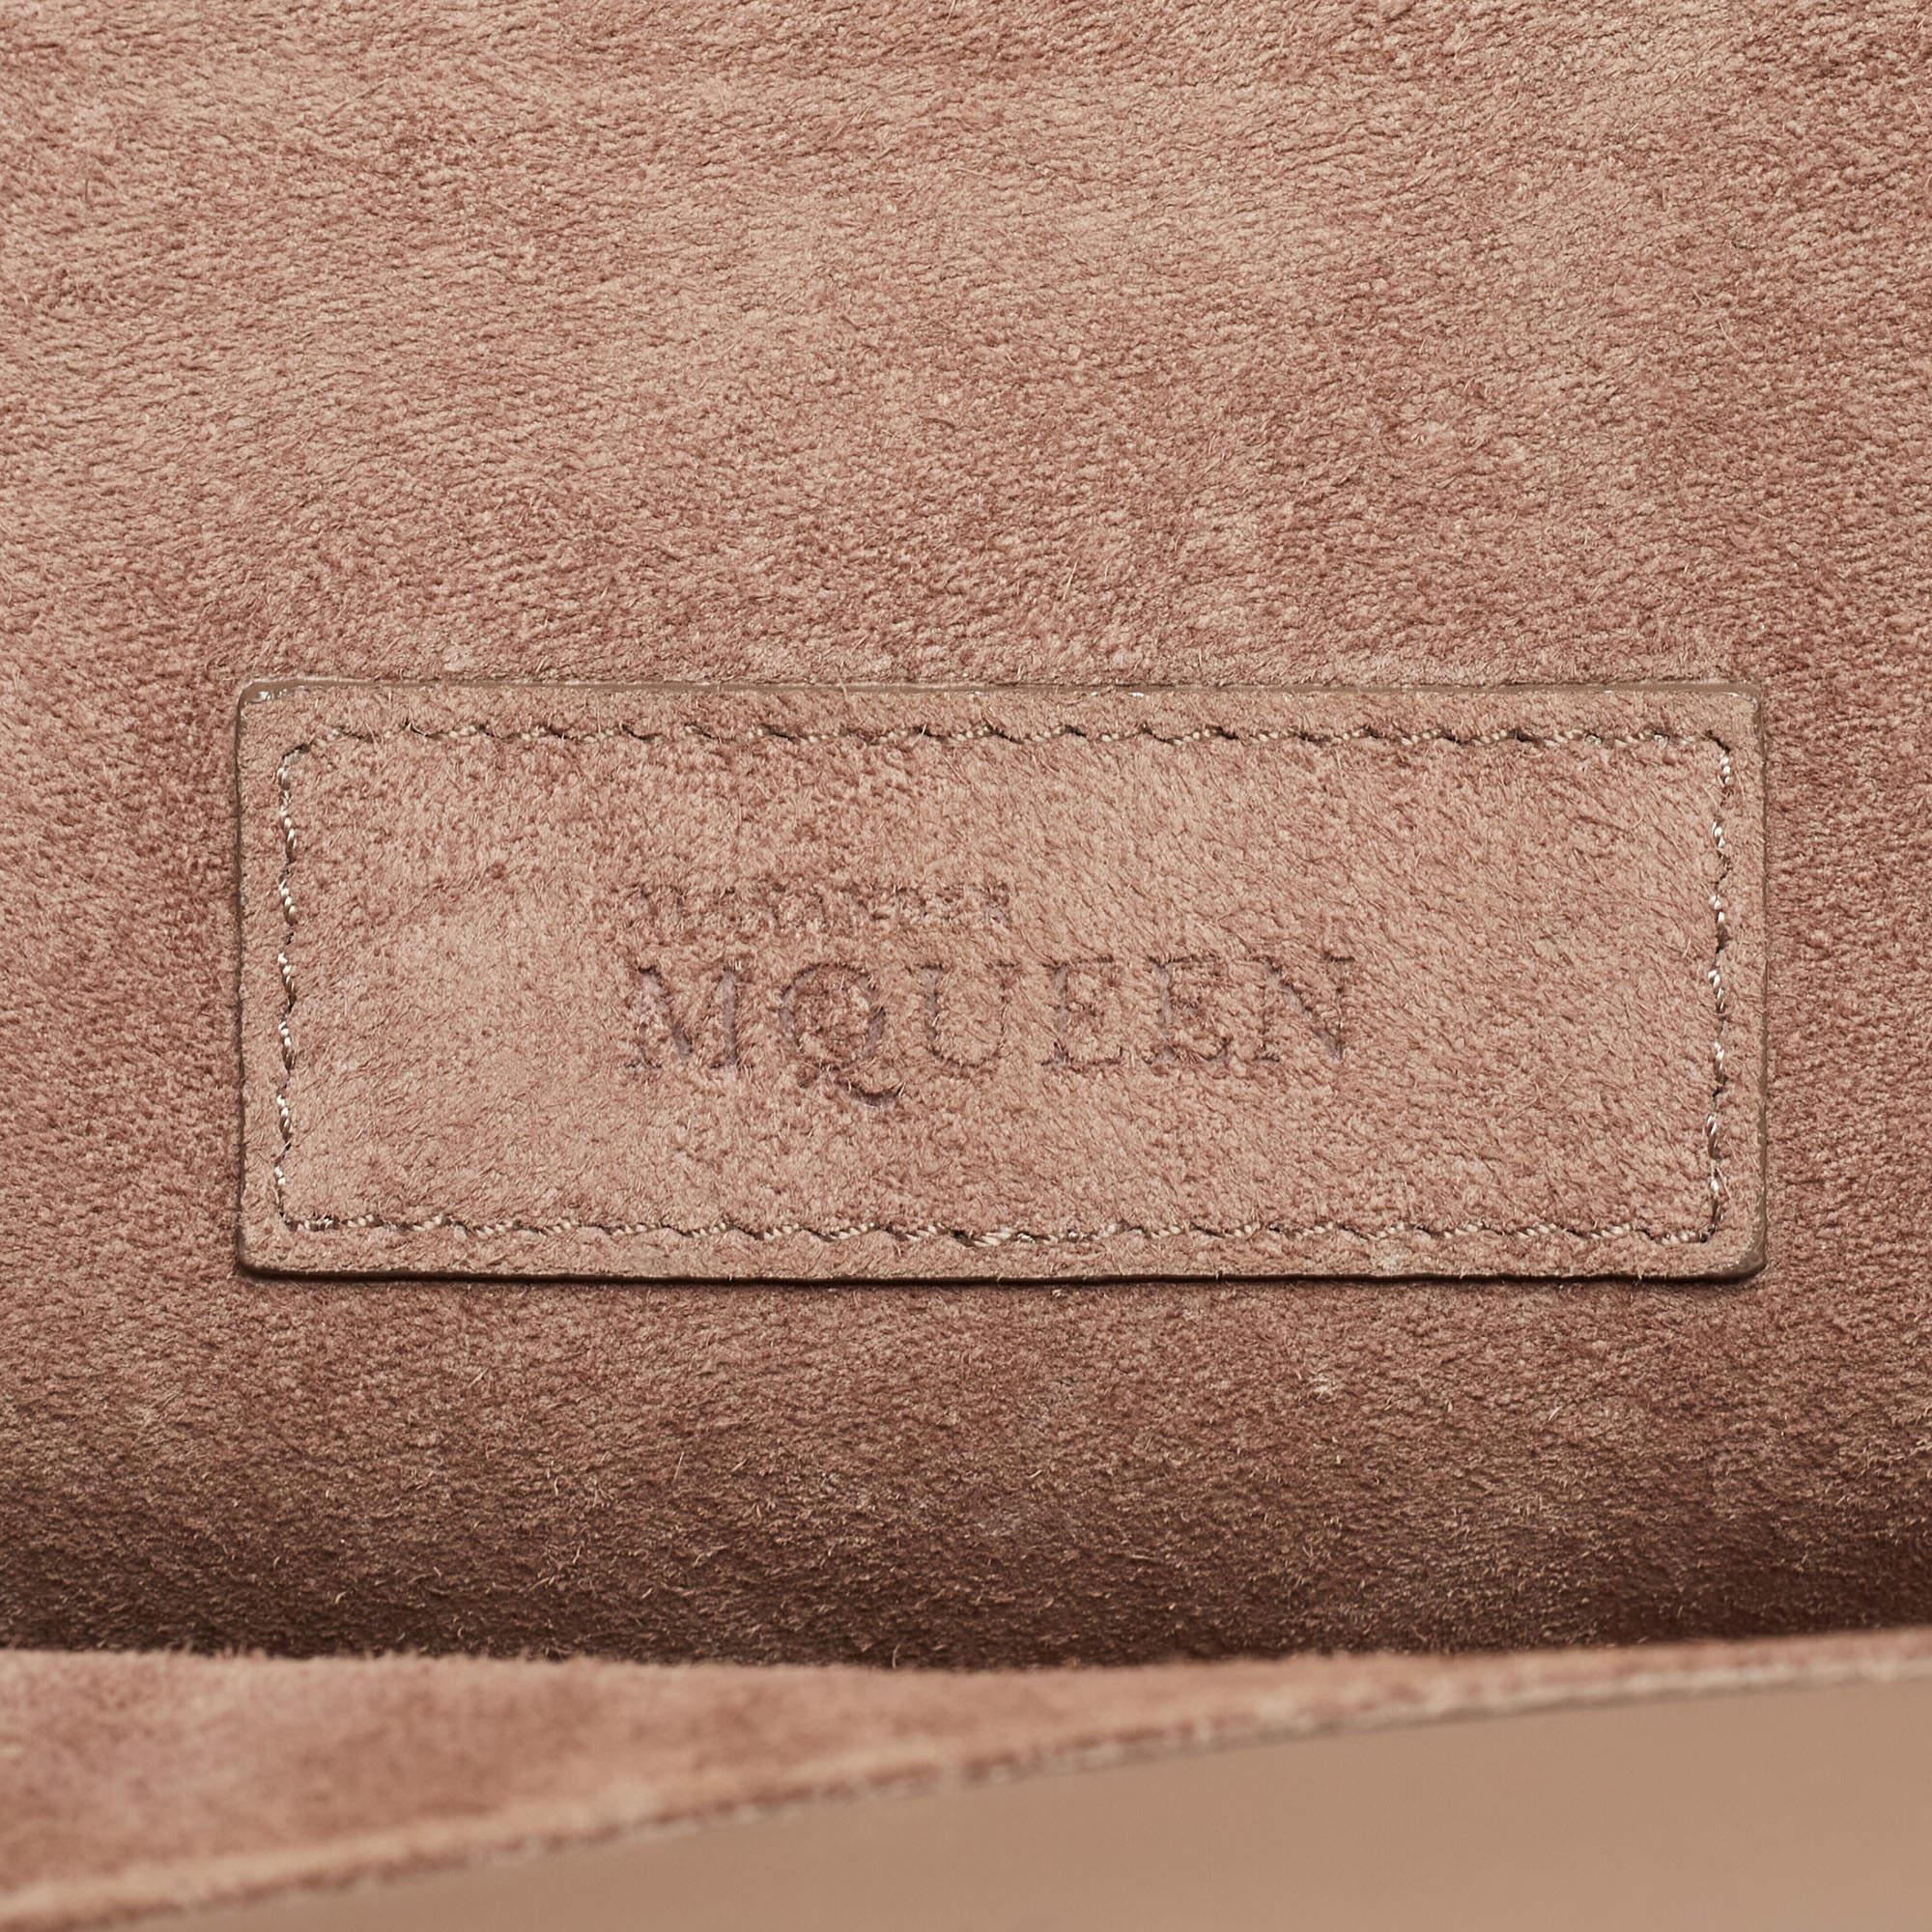 Alexander McQueen Taupe Textured Leather Heroine Chain Shoulder Bag 9